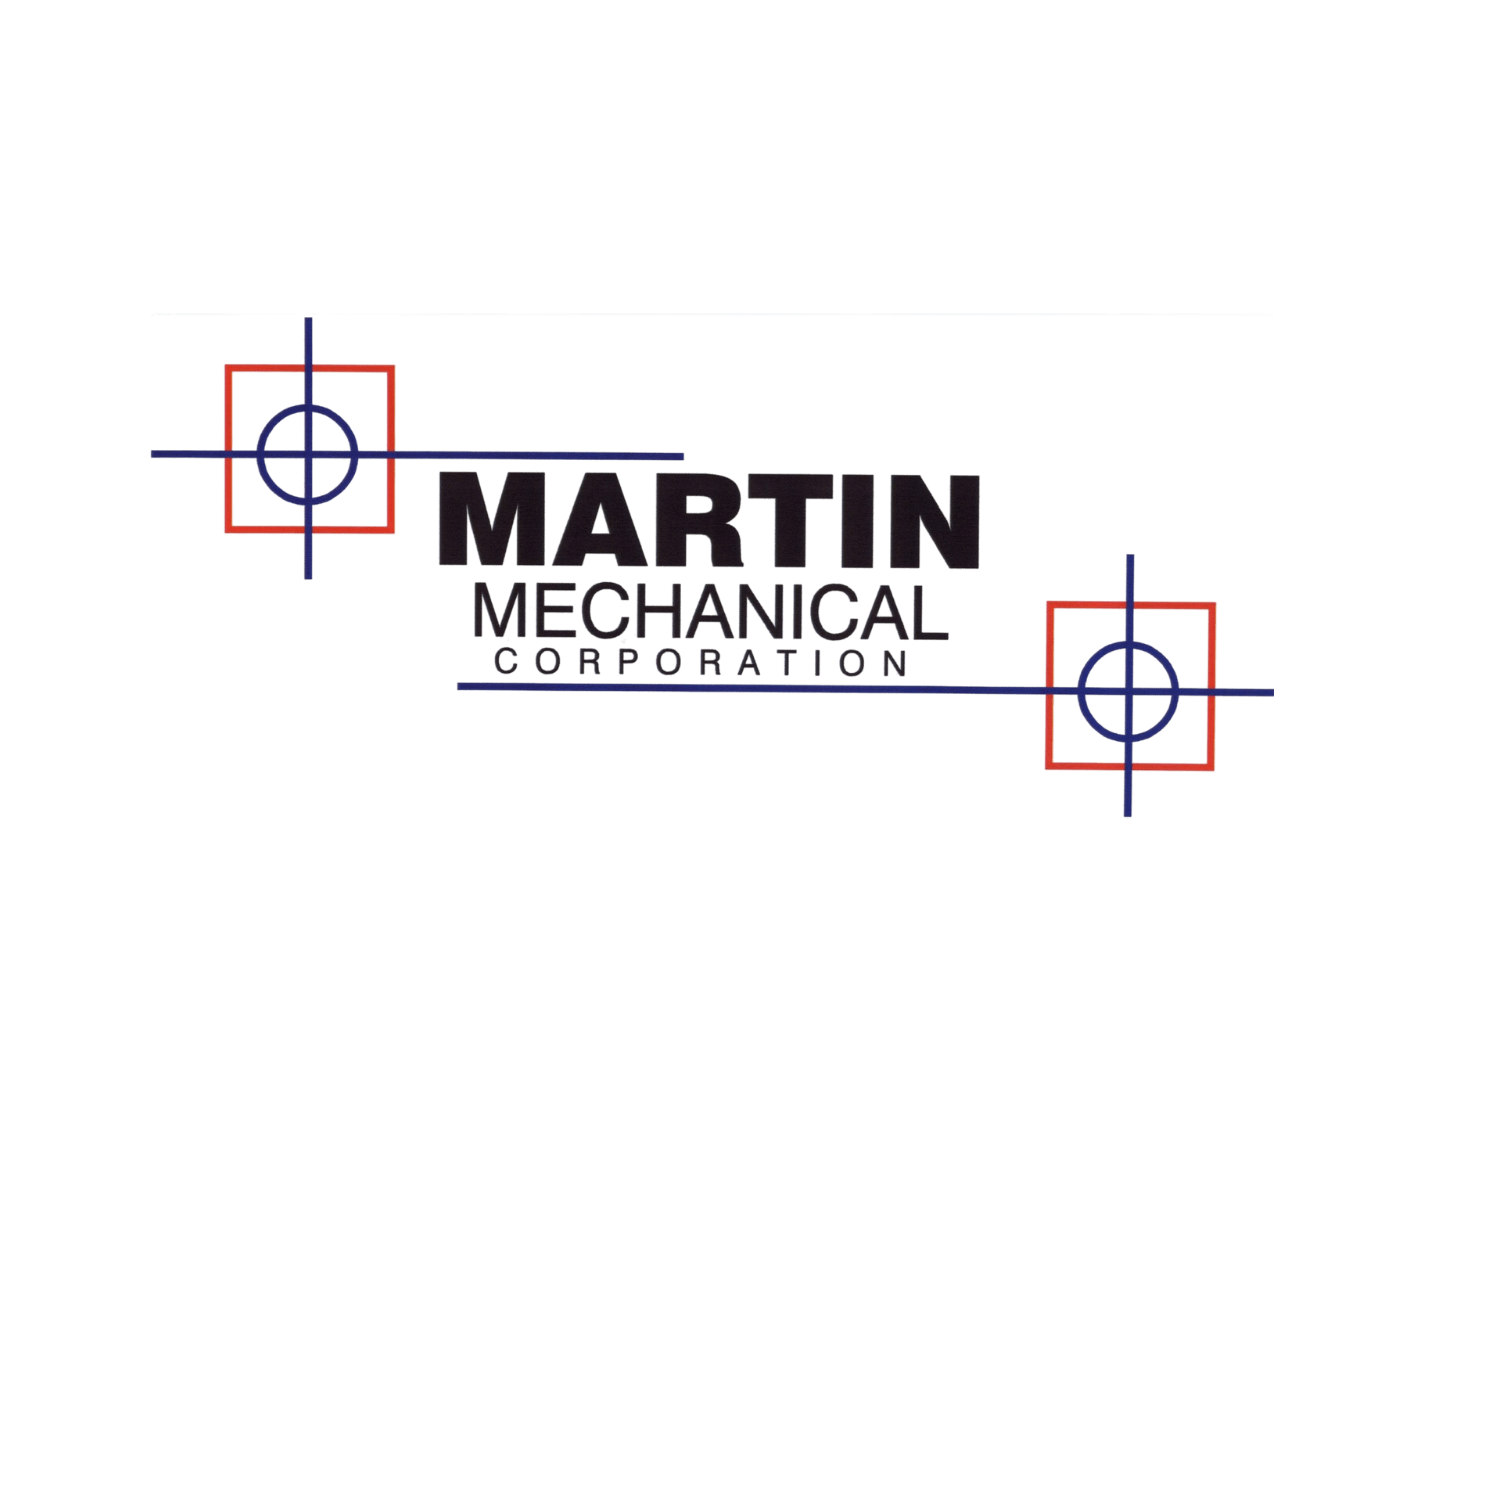 Martin Mechanical Corporation